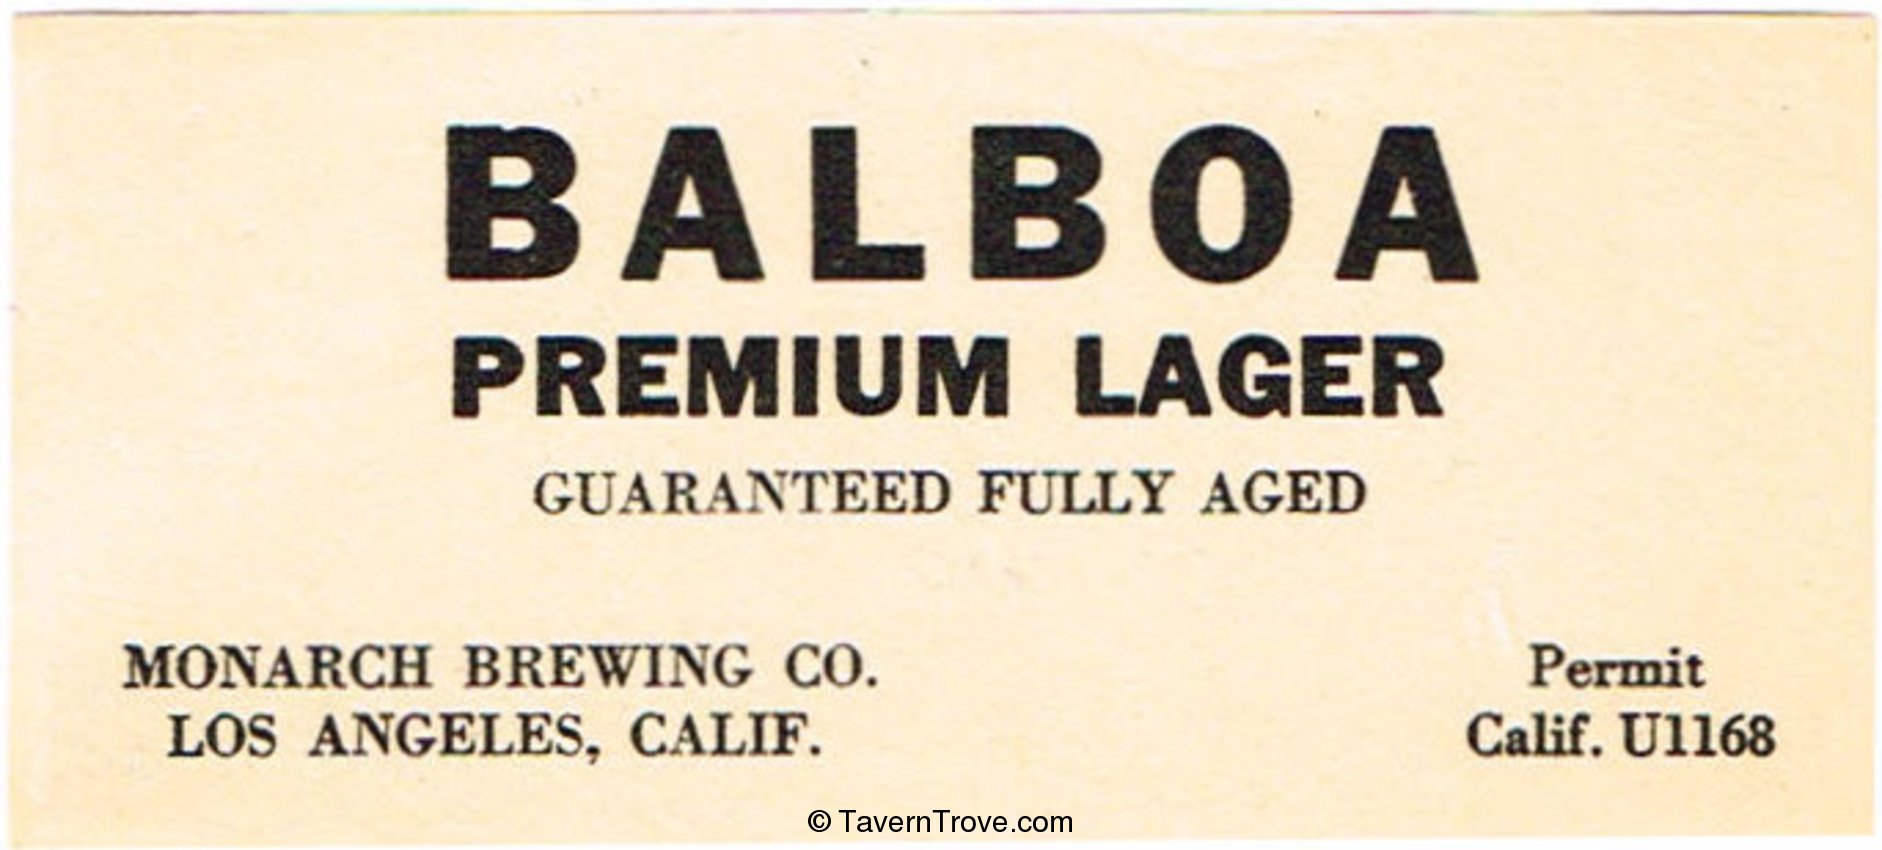 Balboa Premium Beer